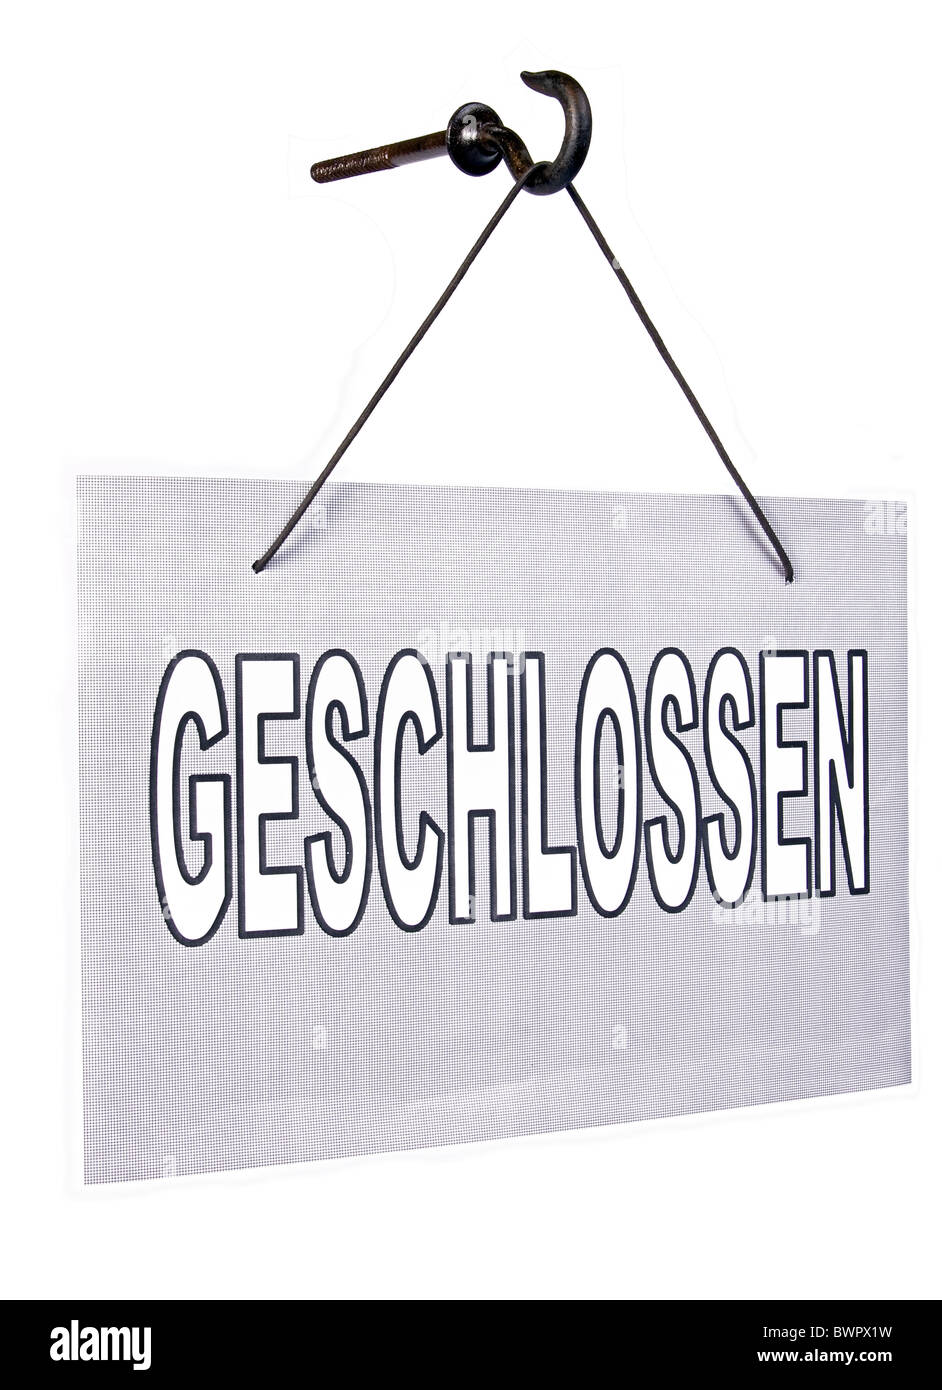 Closed sign in German - Geschlossen sign Stock Photo